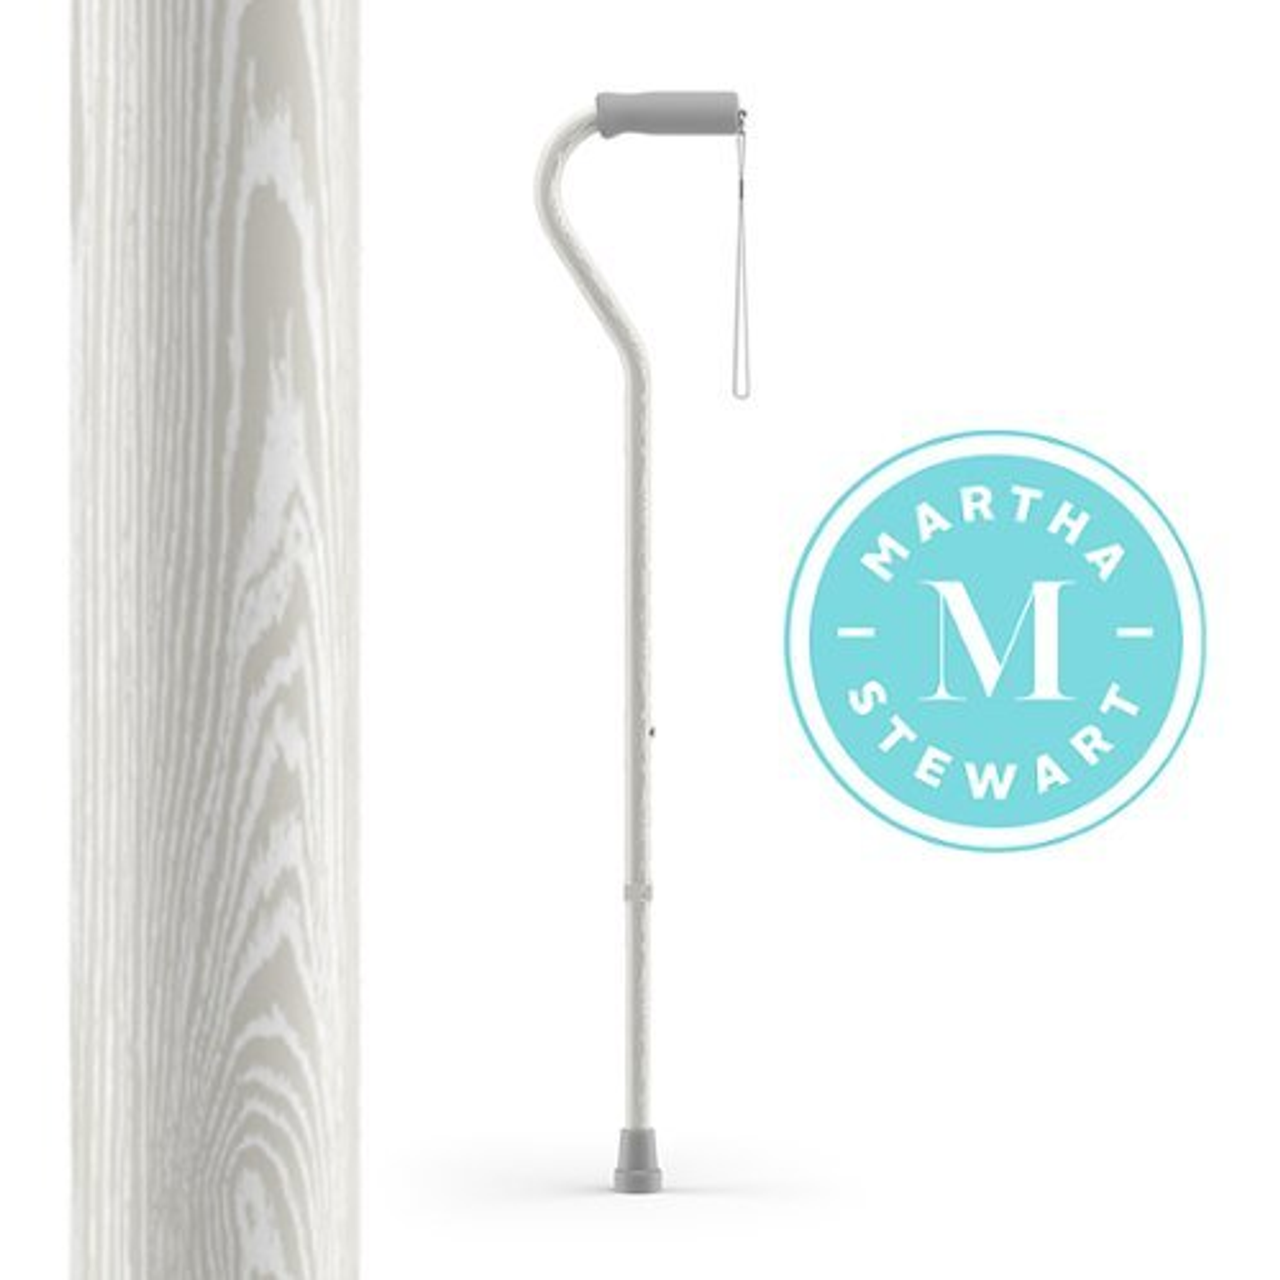 Martha Stewart - Medline Matha Stewart Adjustable Offset Cane, Fashion Walking Cane, Supports up to 250 lbs., Wood - white